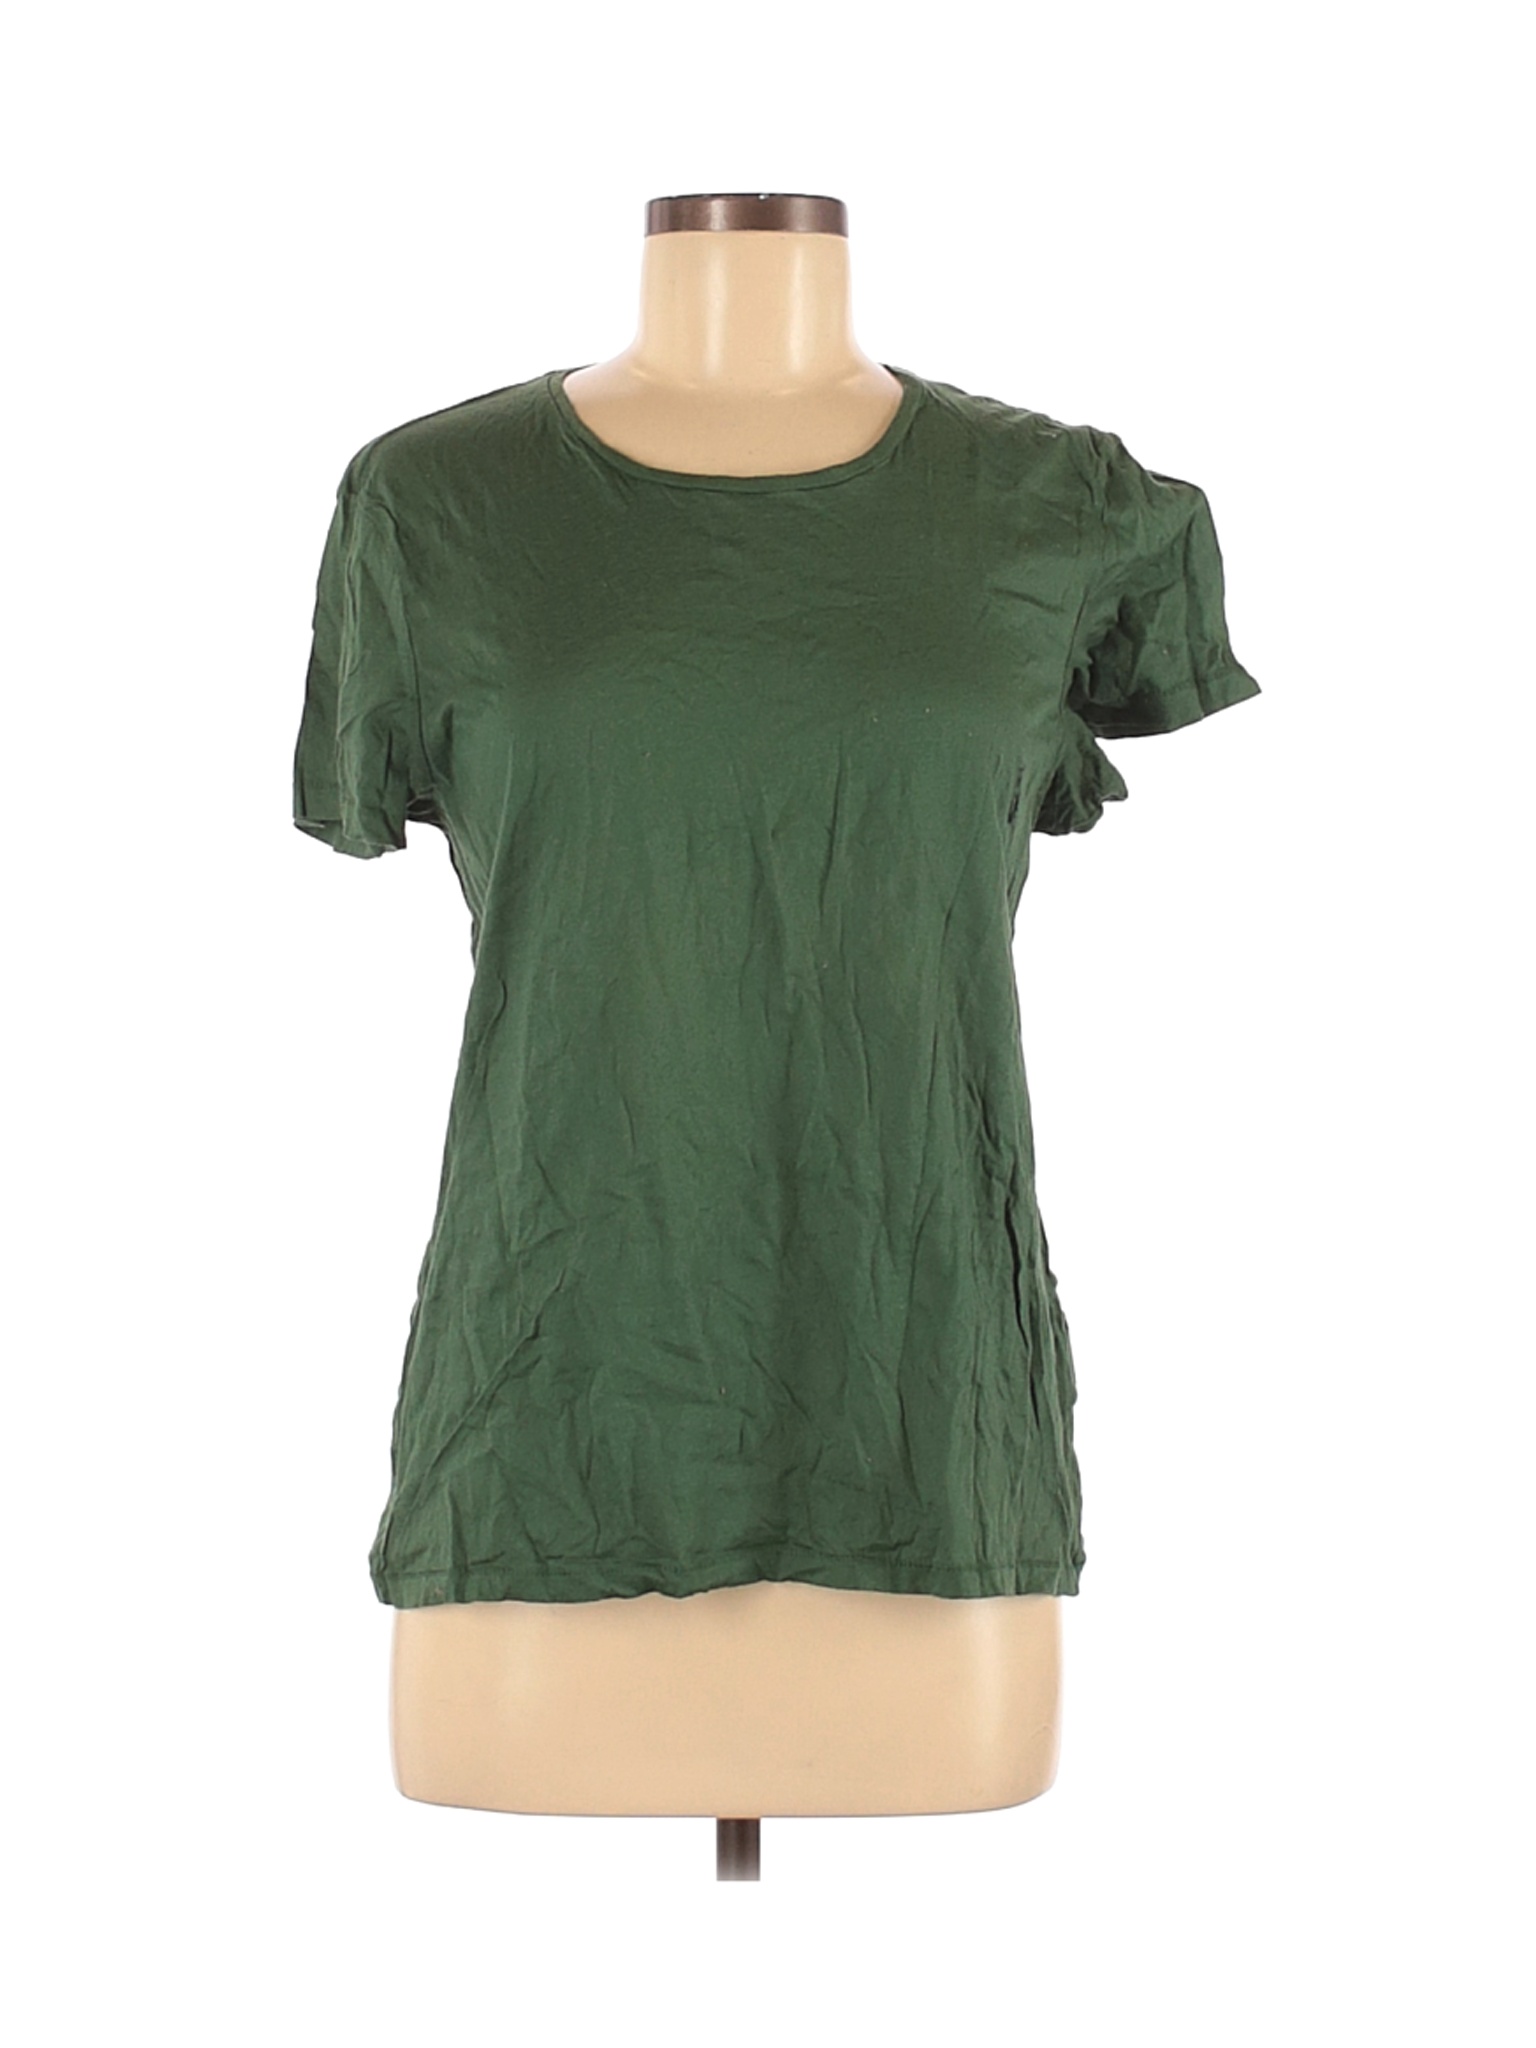 Acne Studios Women Green Short Sleeve T-Shirt M | eBay